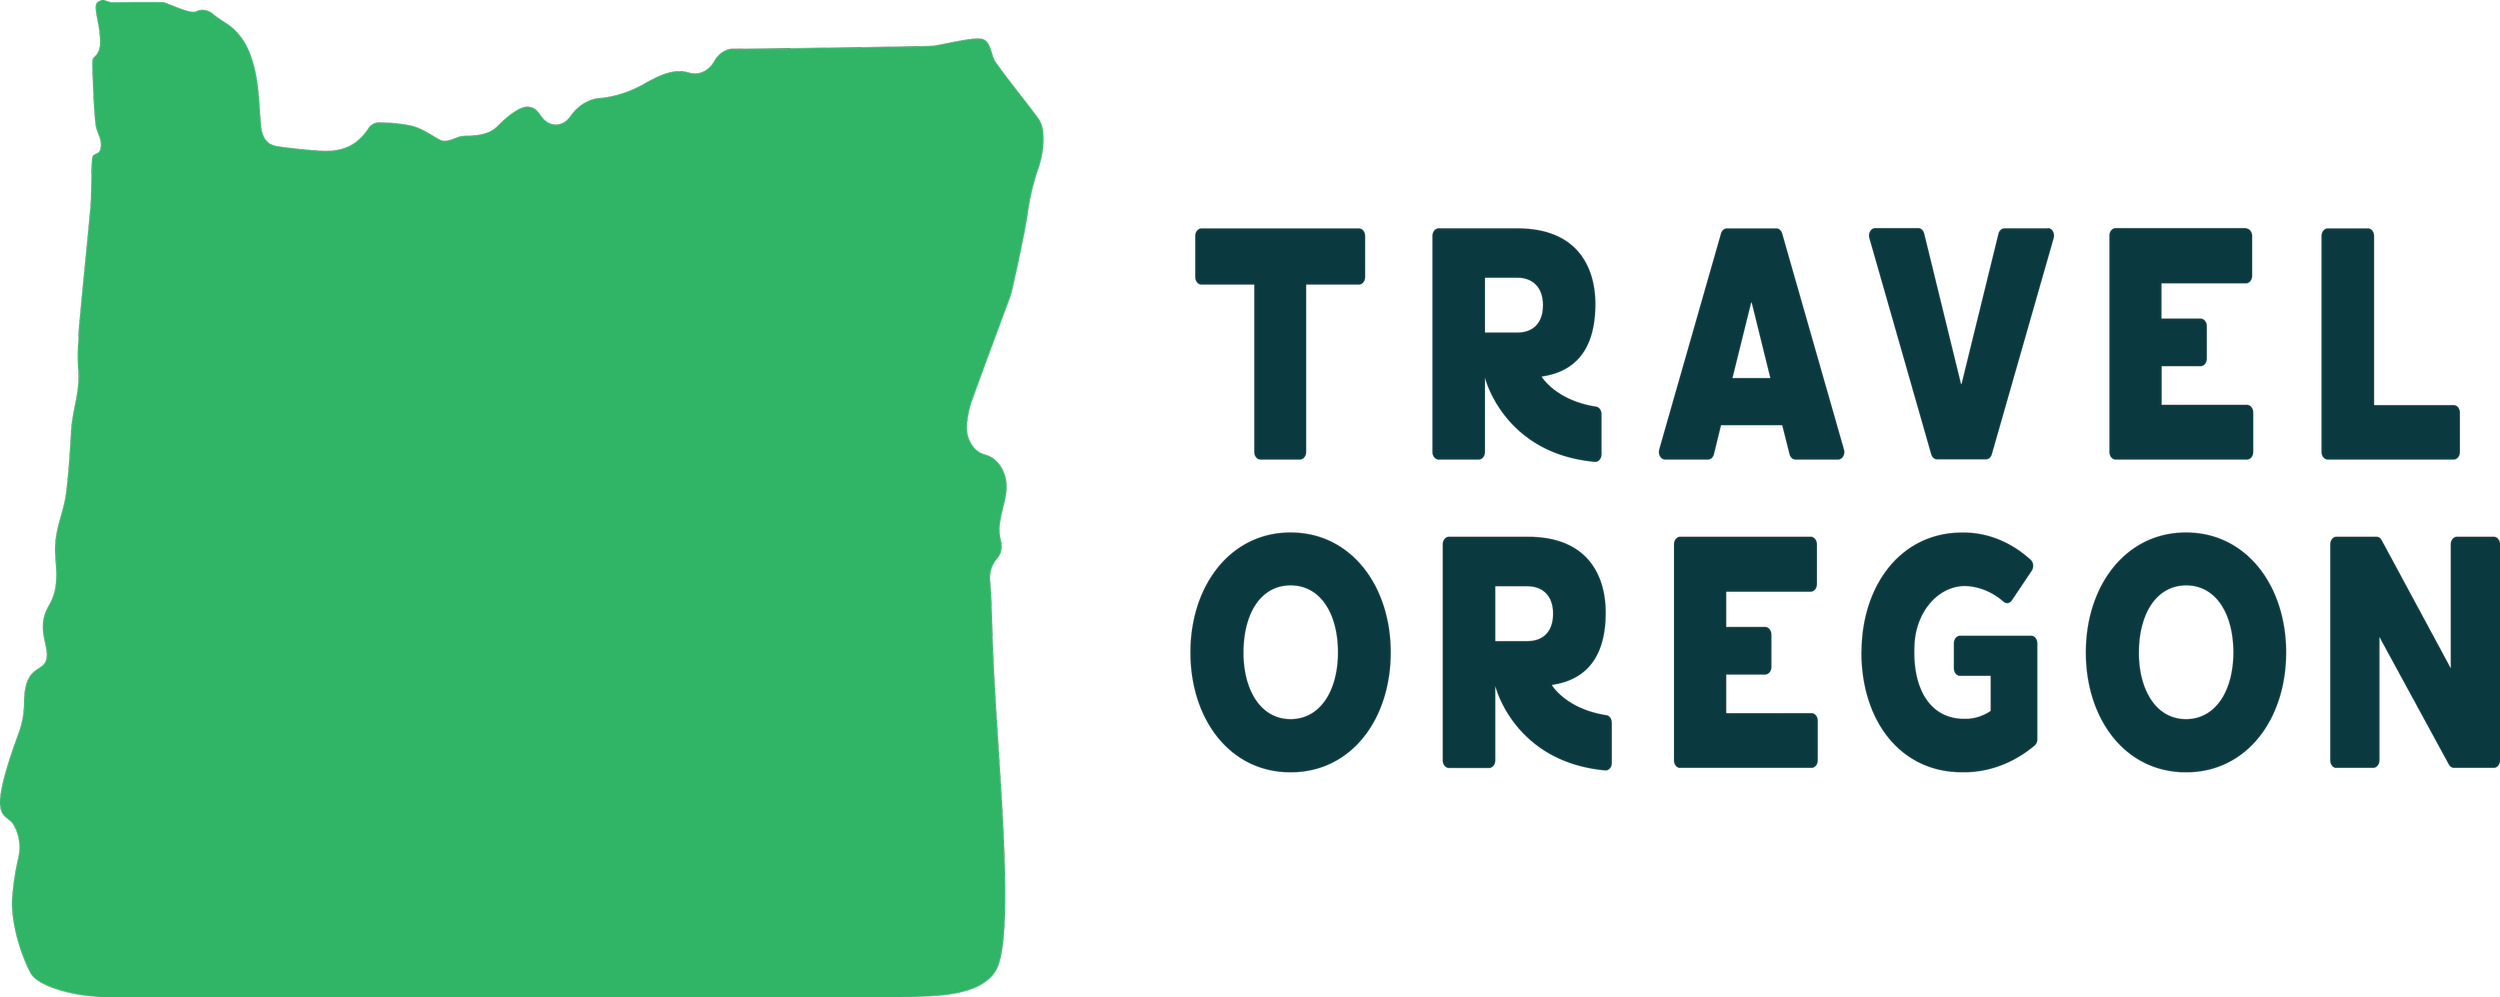 Travel_Oregon_Logo.png